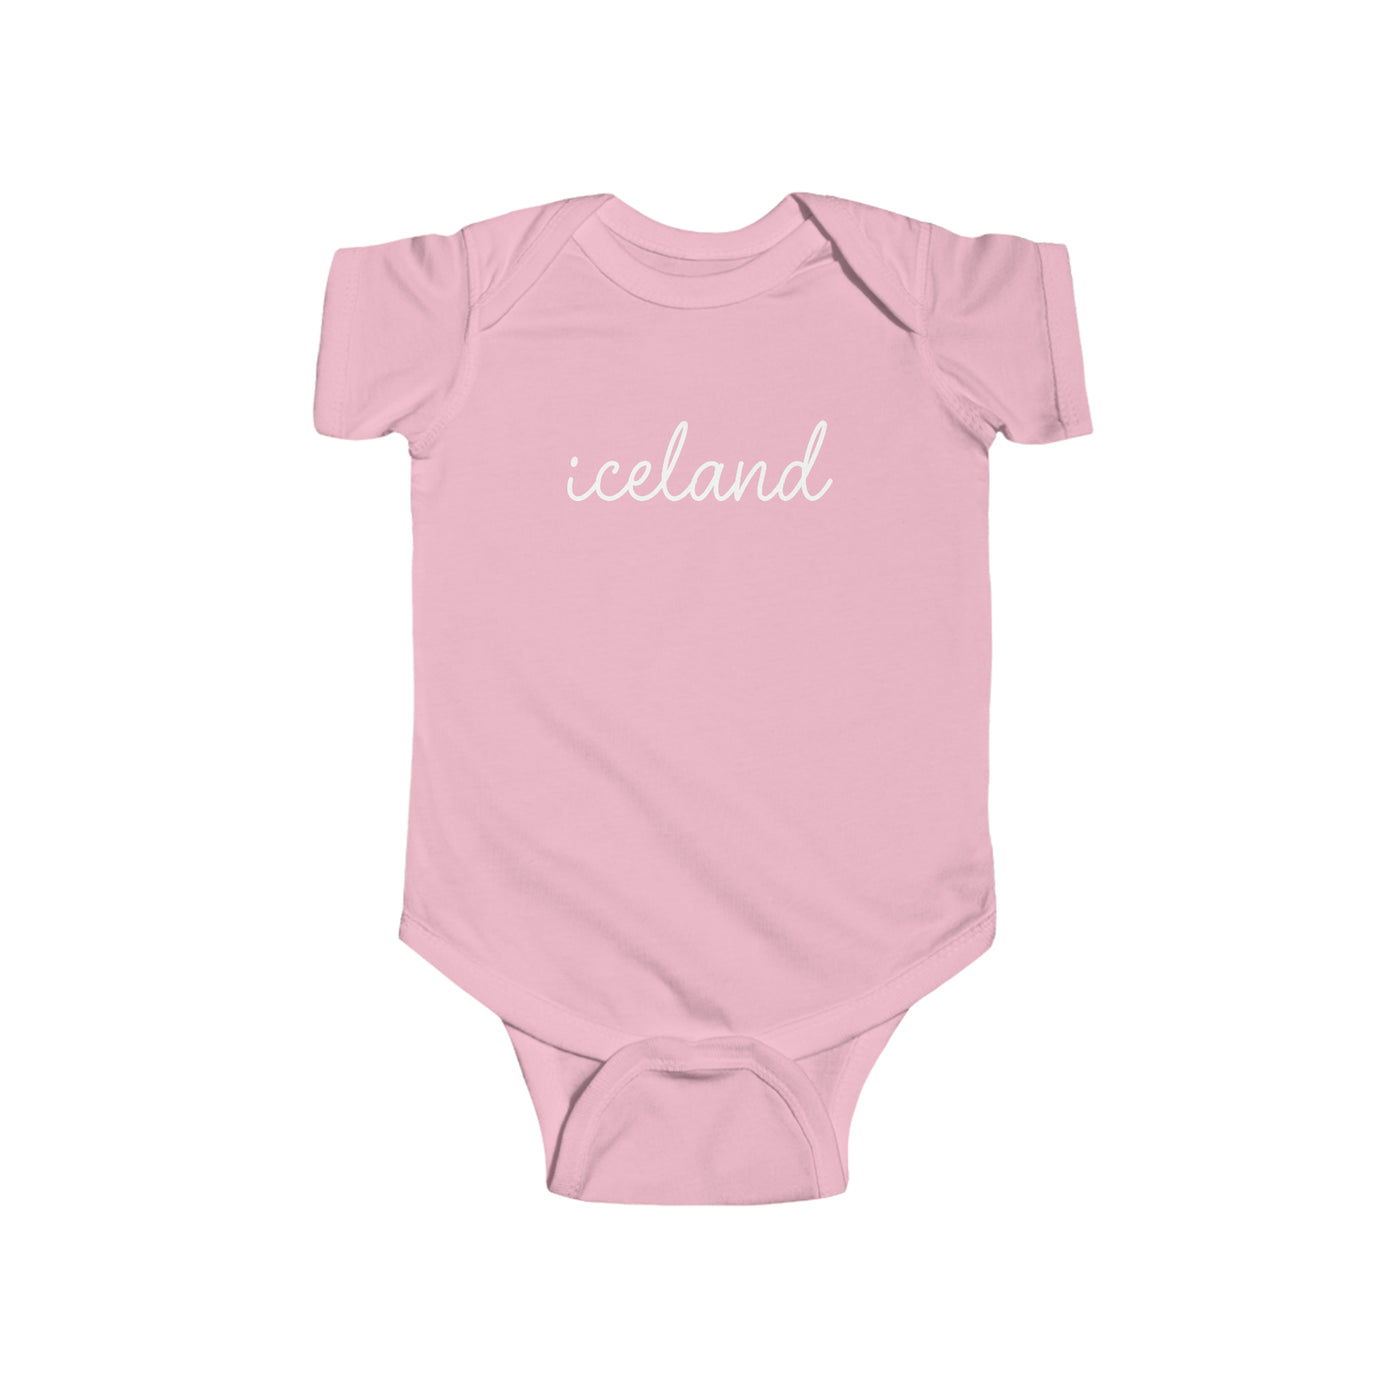 Iceland Baby Bodysuit